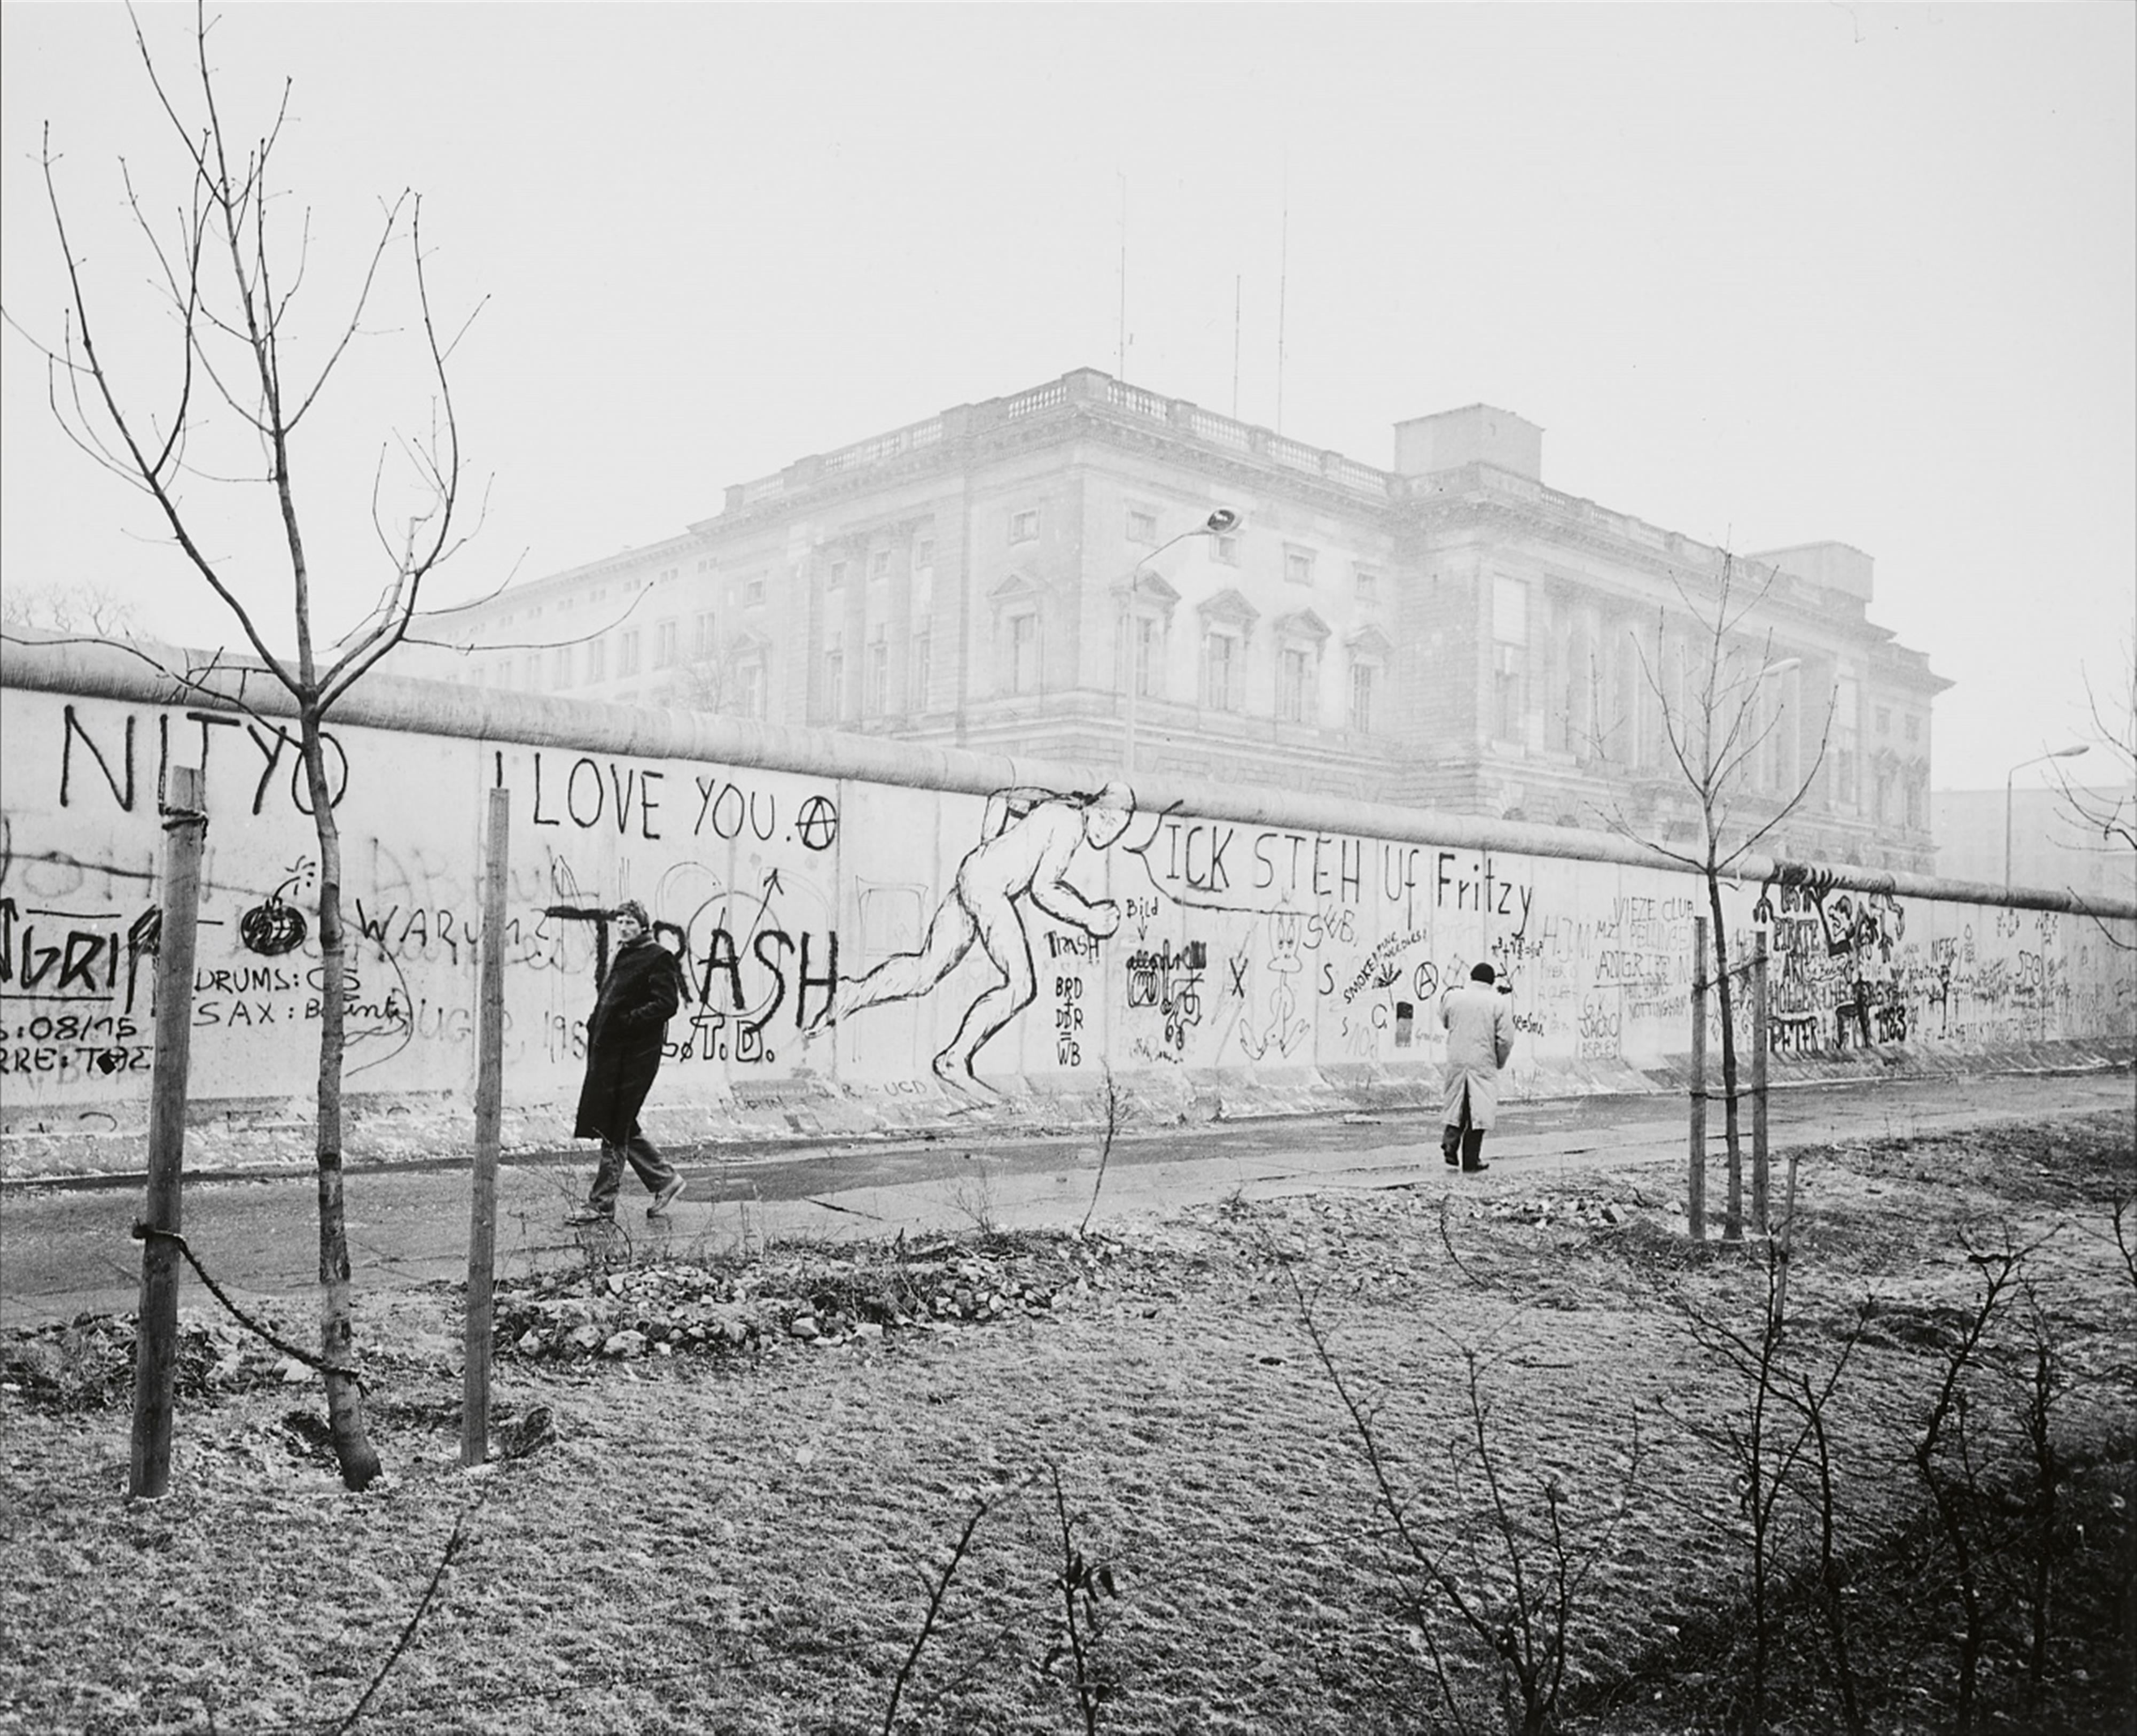 Thomas Lüttge - Fritzy, Mauer, Berlin - image-1